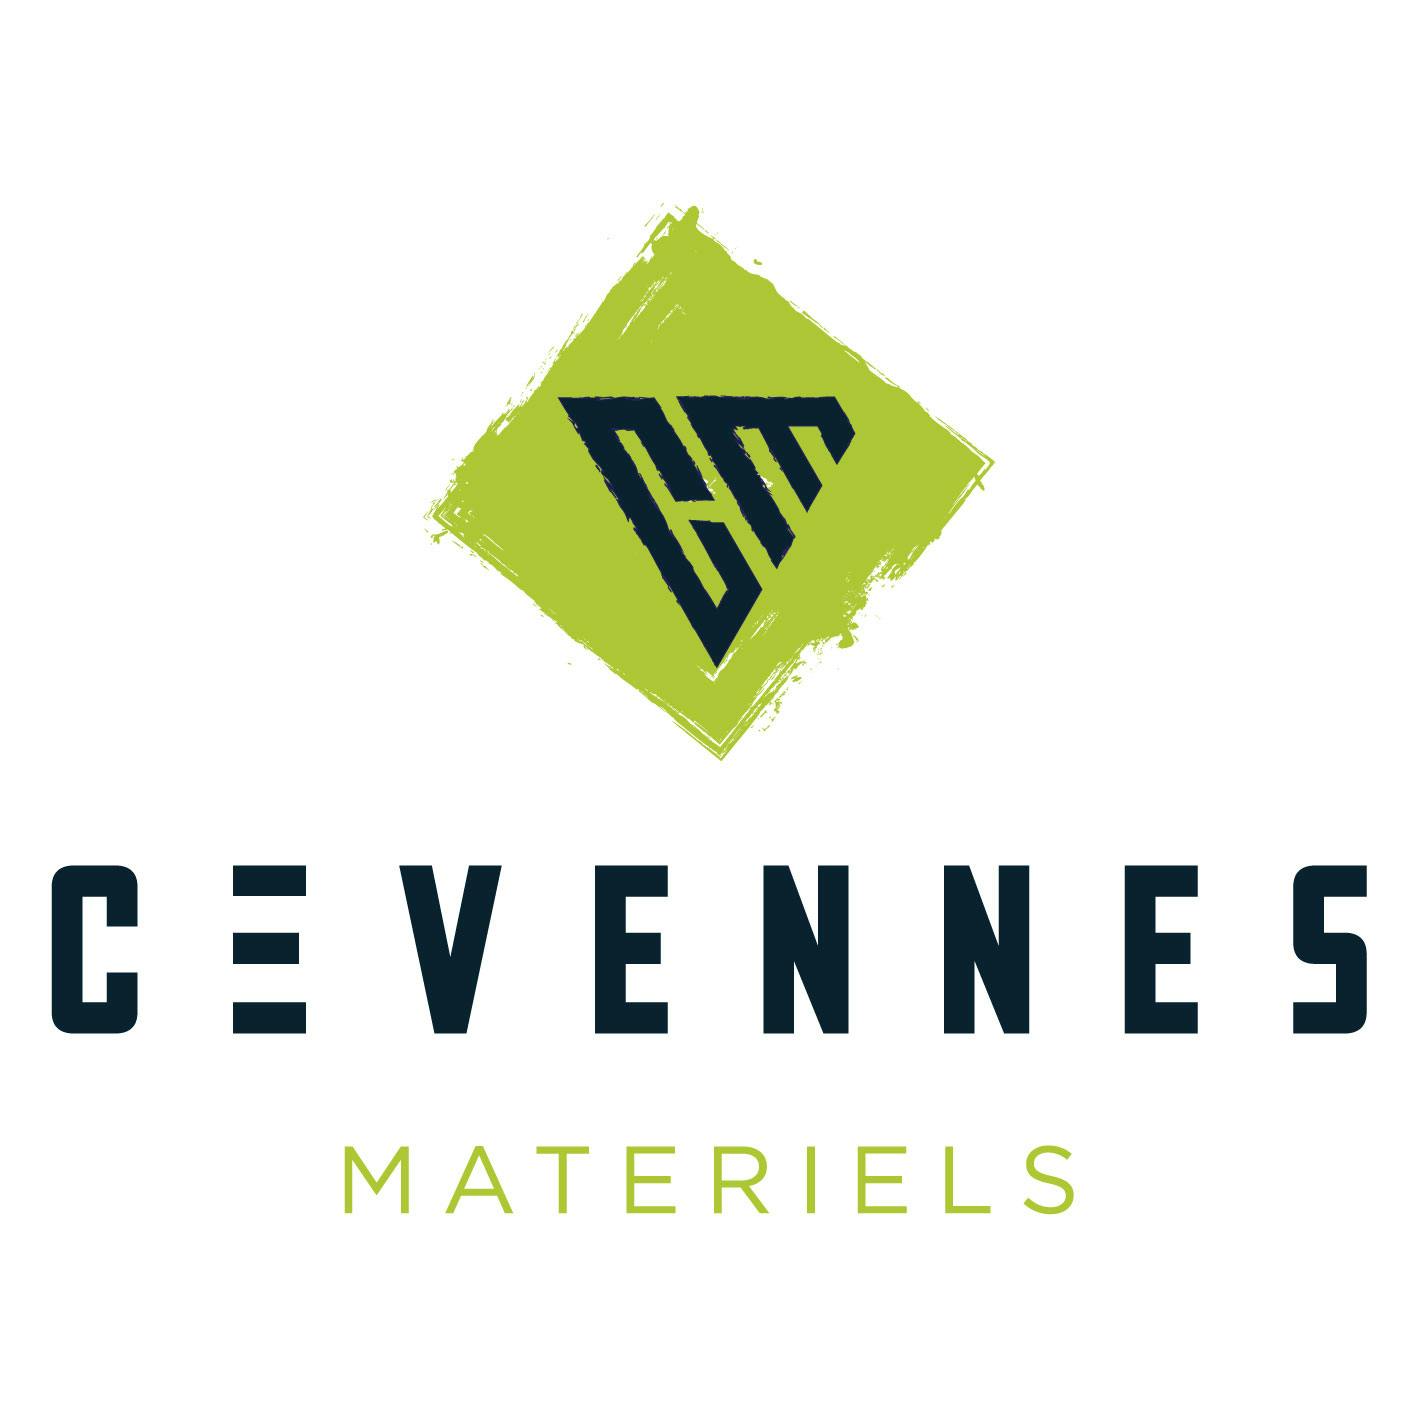 Company logo for 'CEVENNES MATERIELS'.